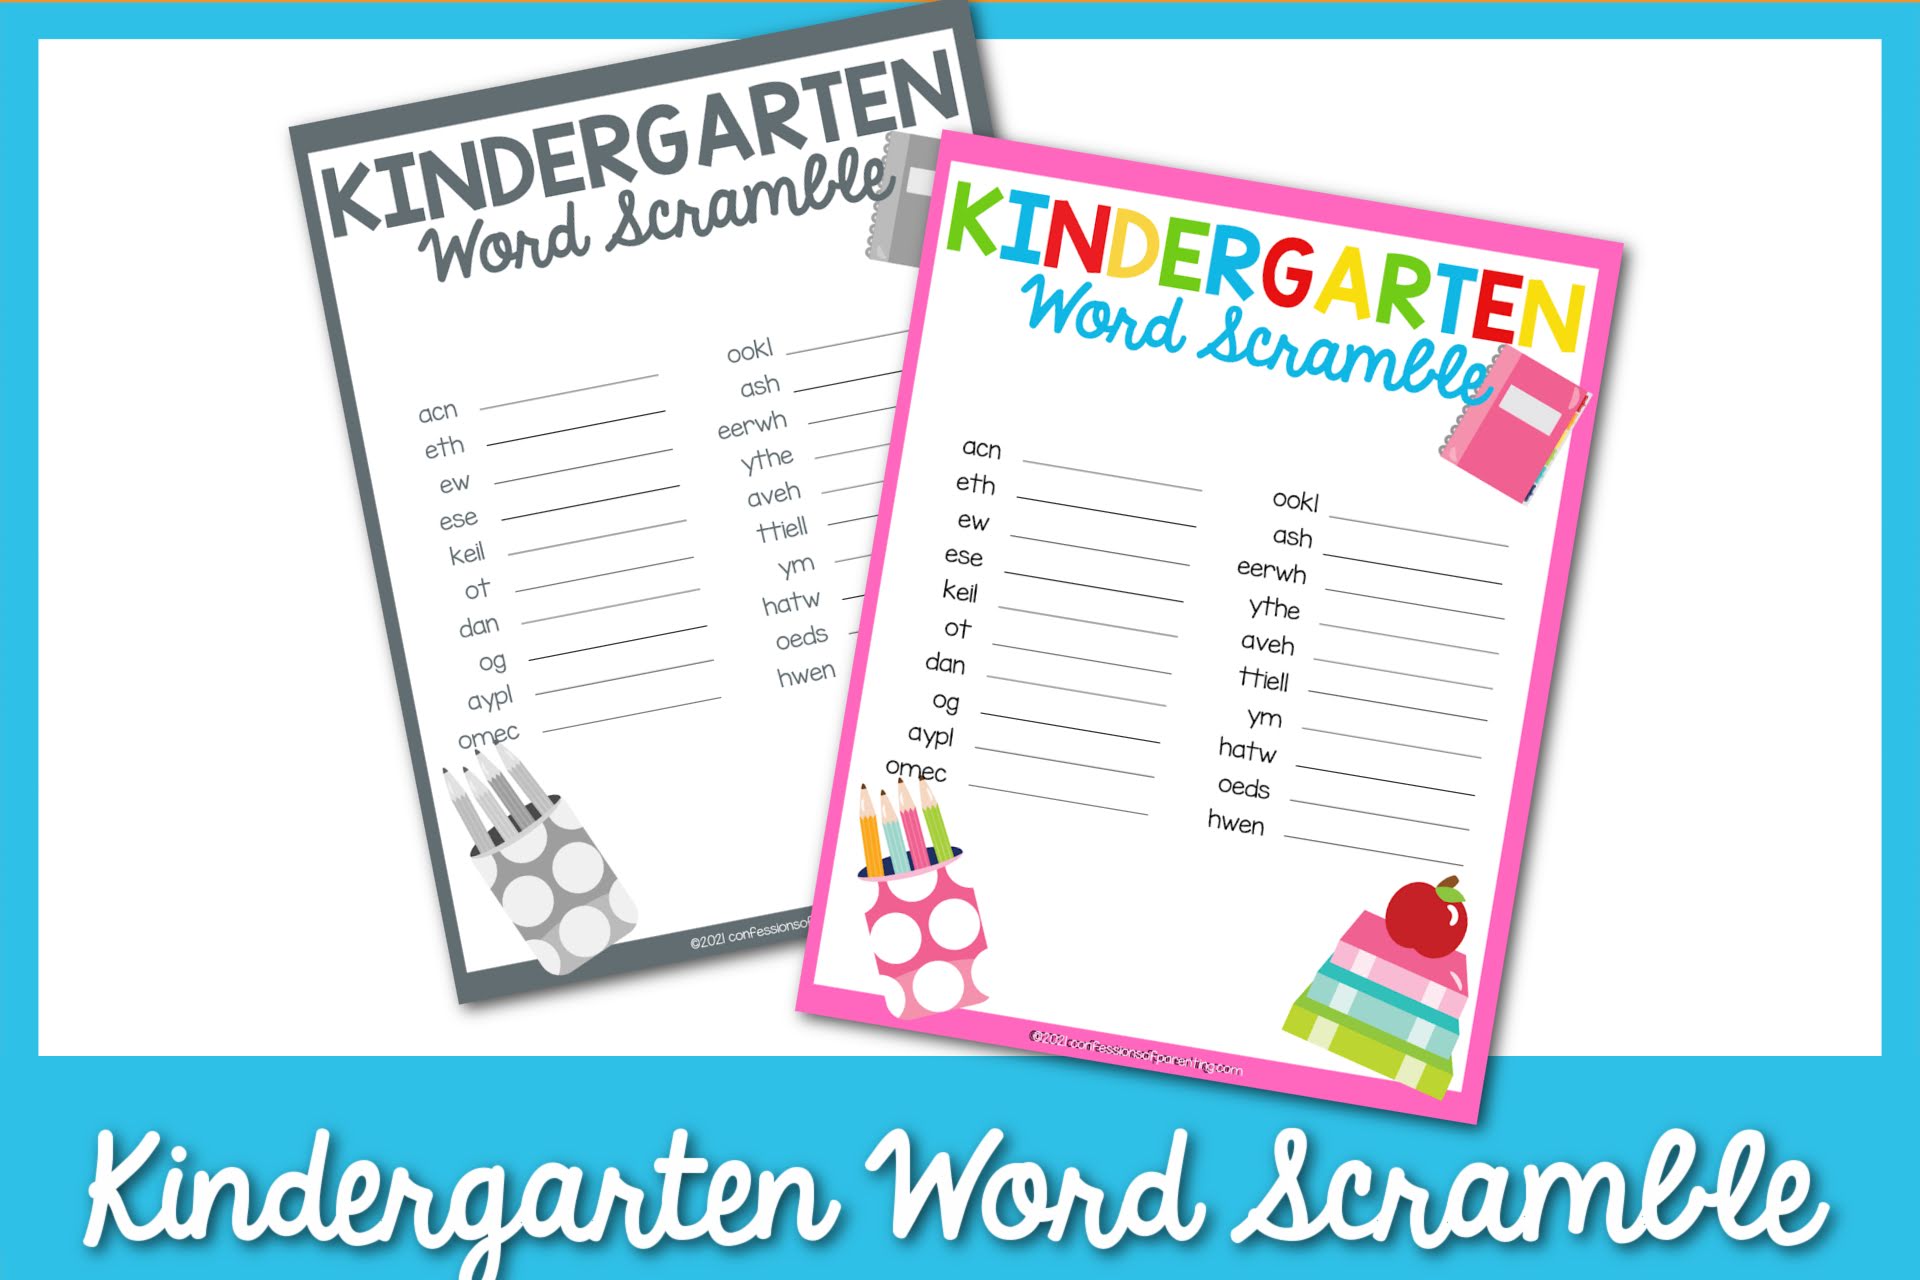 Feature Kindergarten word scramble printable